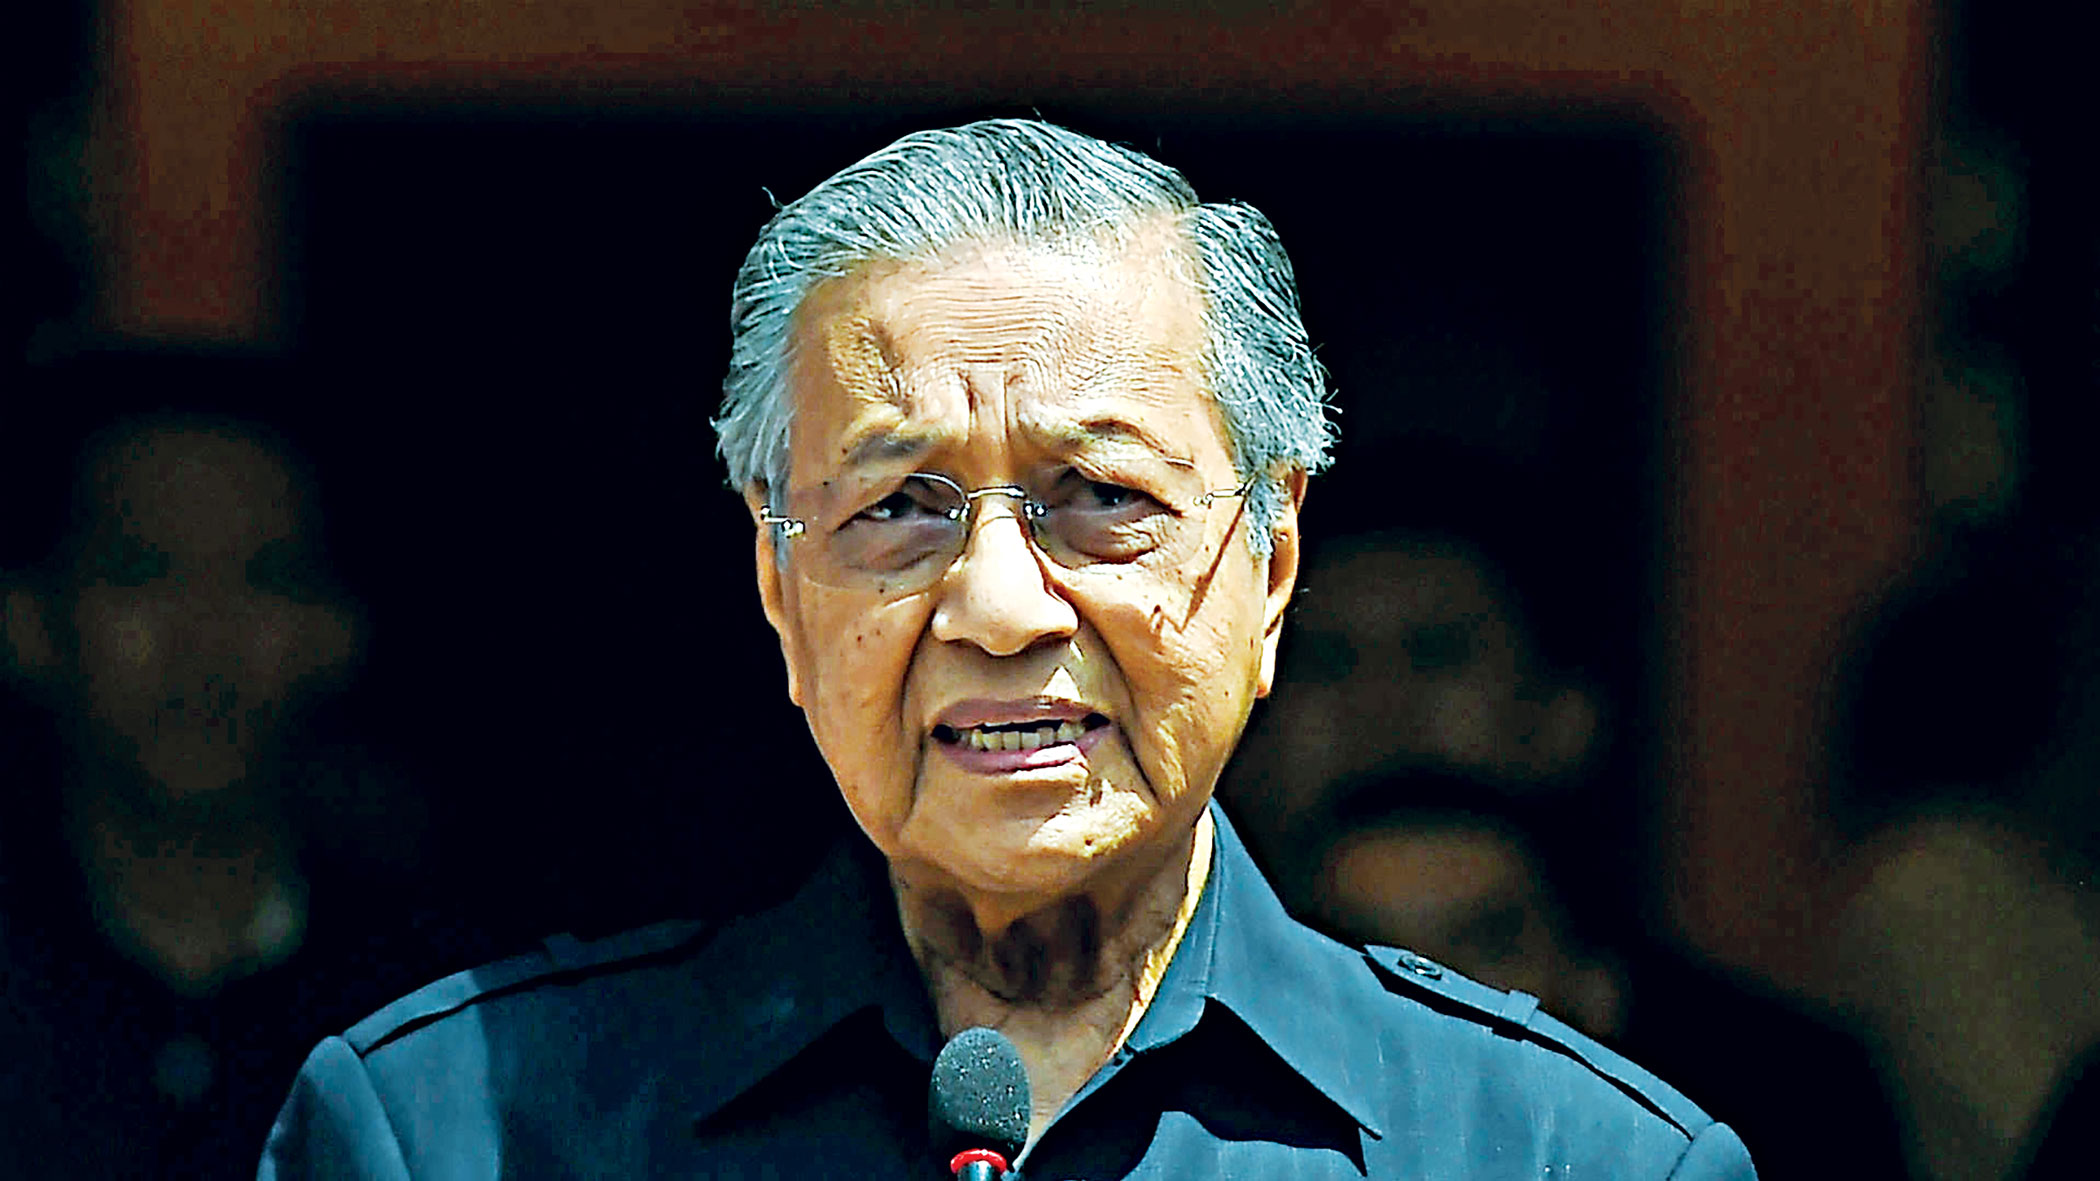 Mohamad away mahathir passed Mahathir Mohamad: